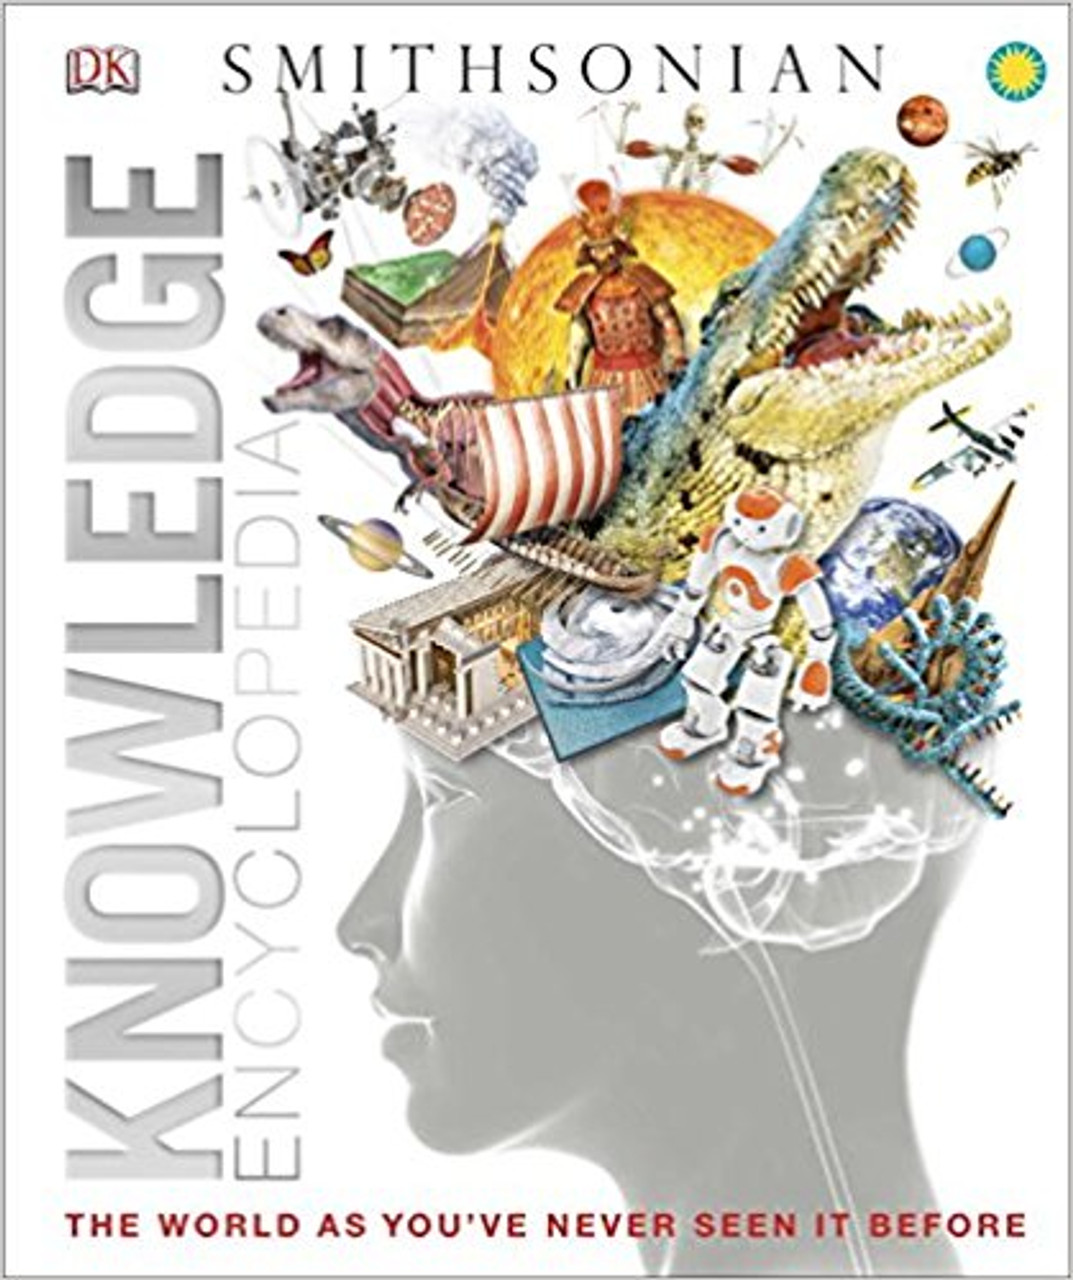 Knowledge Encyclopedia by DK